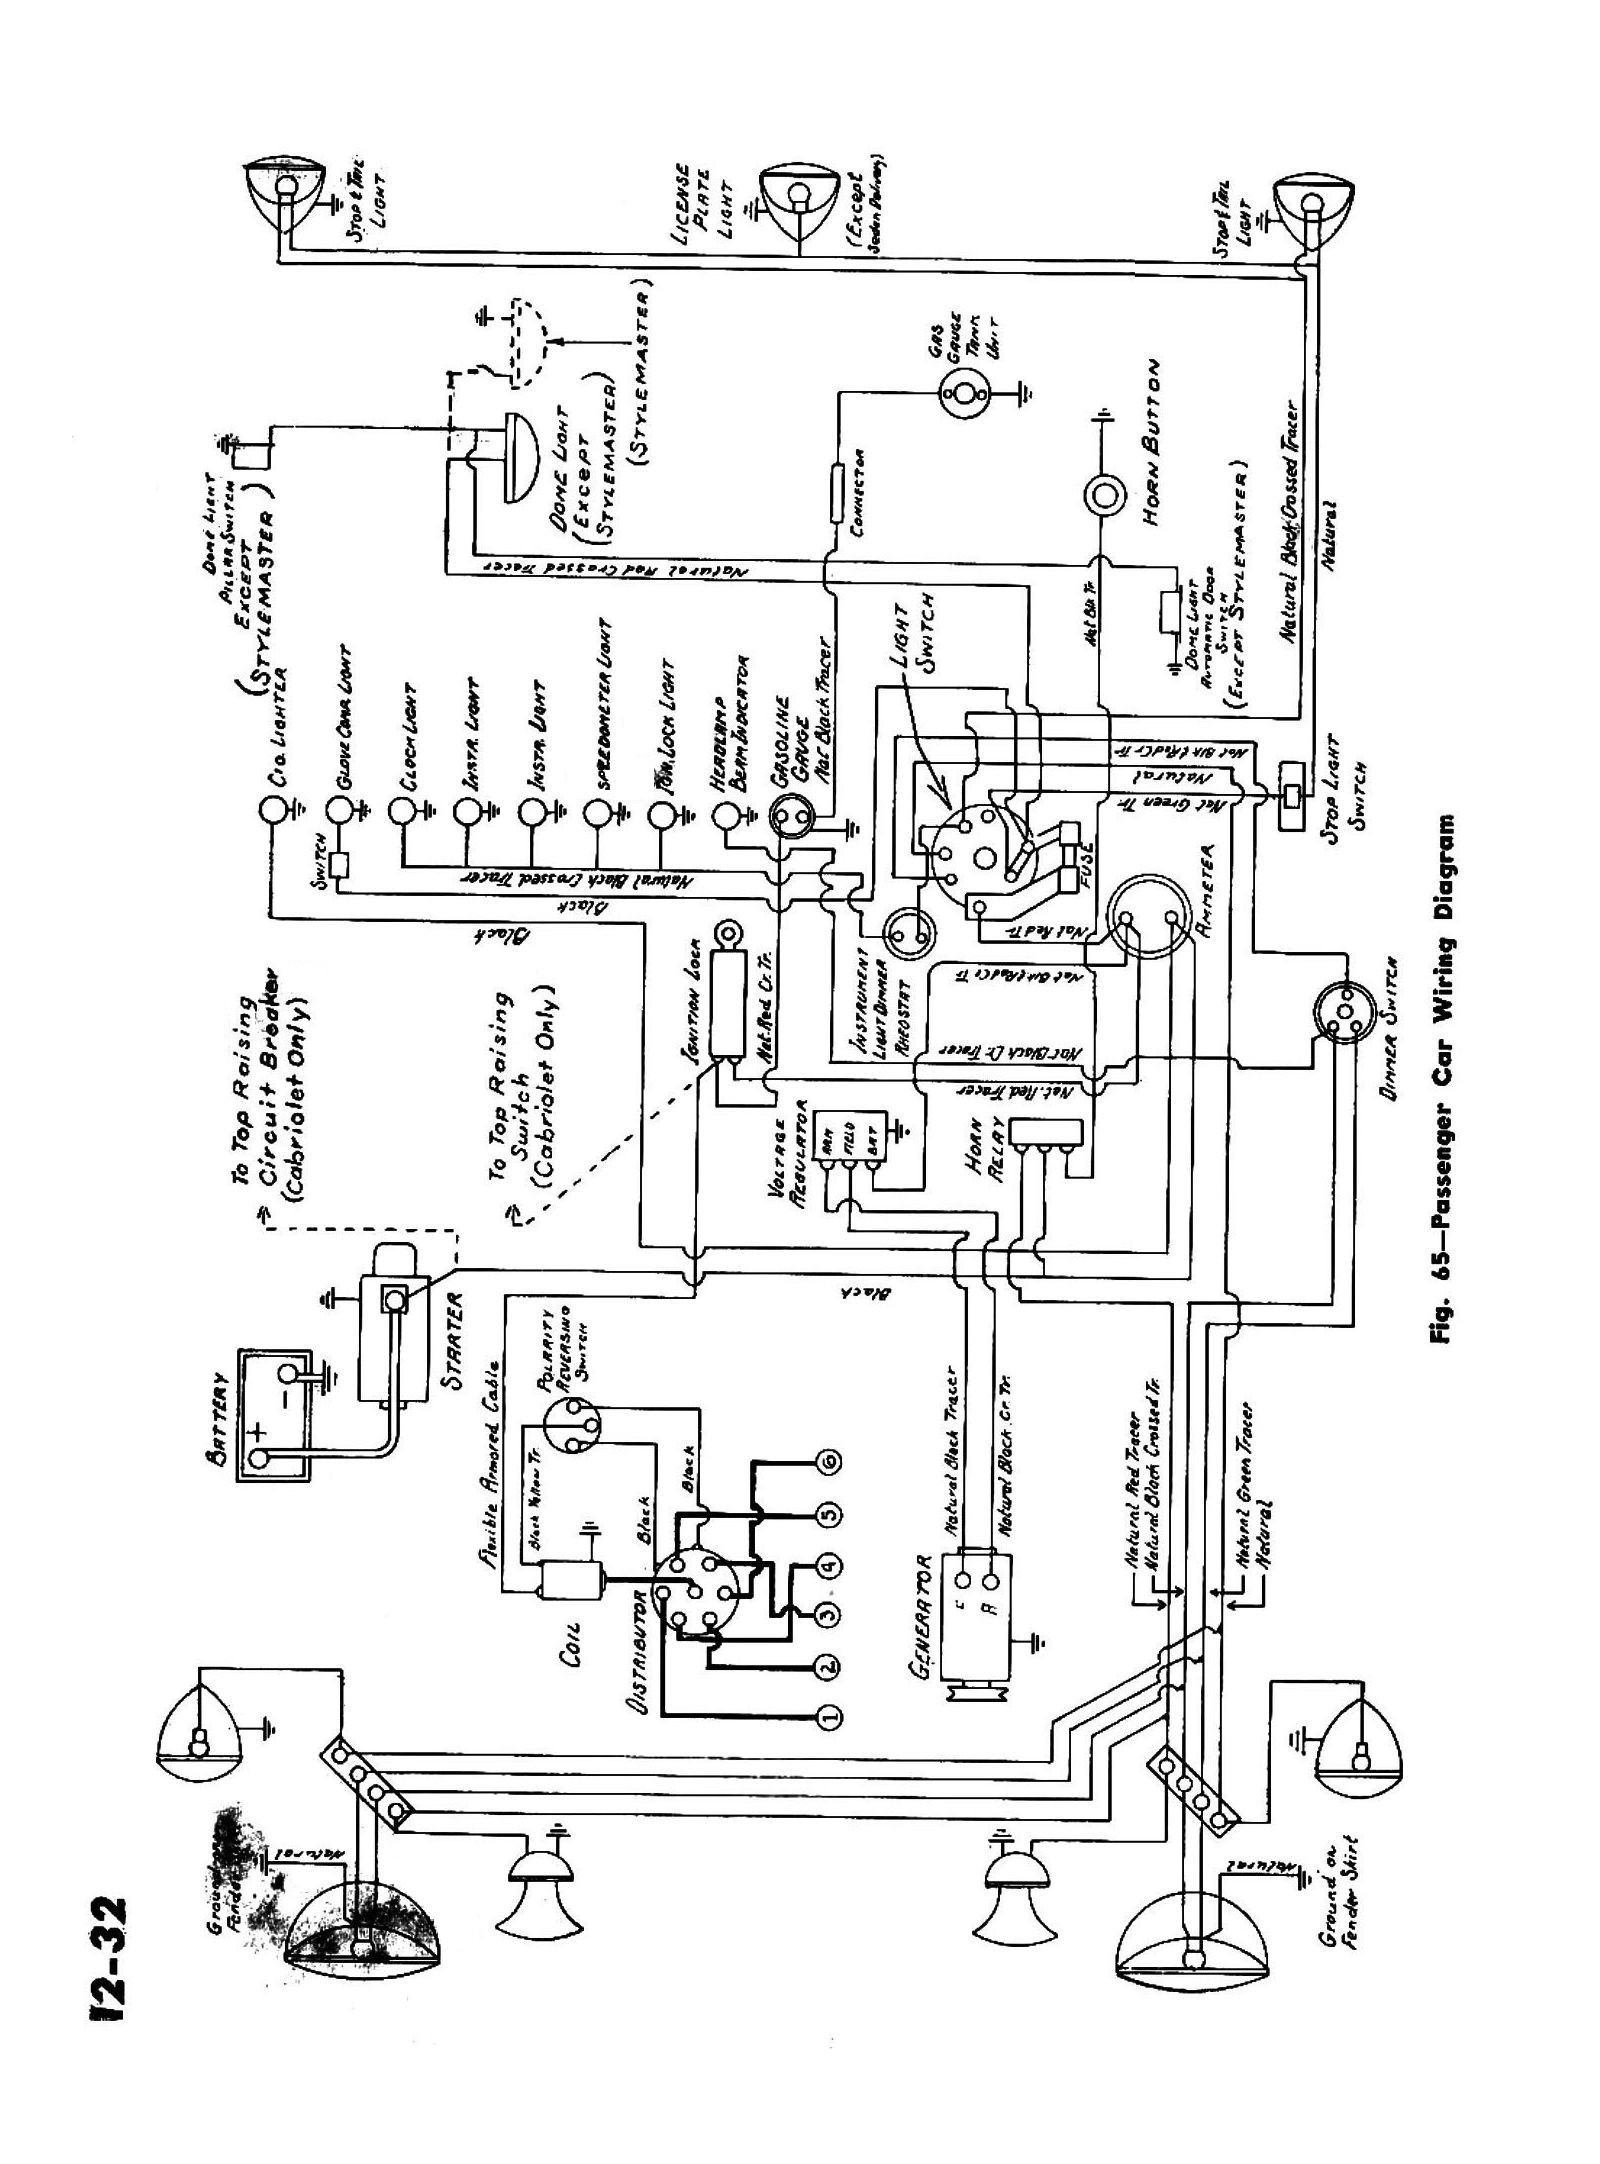 Chevy Wiring Diagrams, Chevrolet Truck Wiring Diagrams Free Pdf